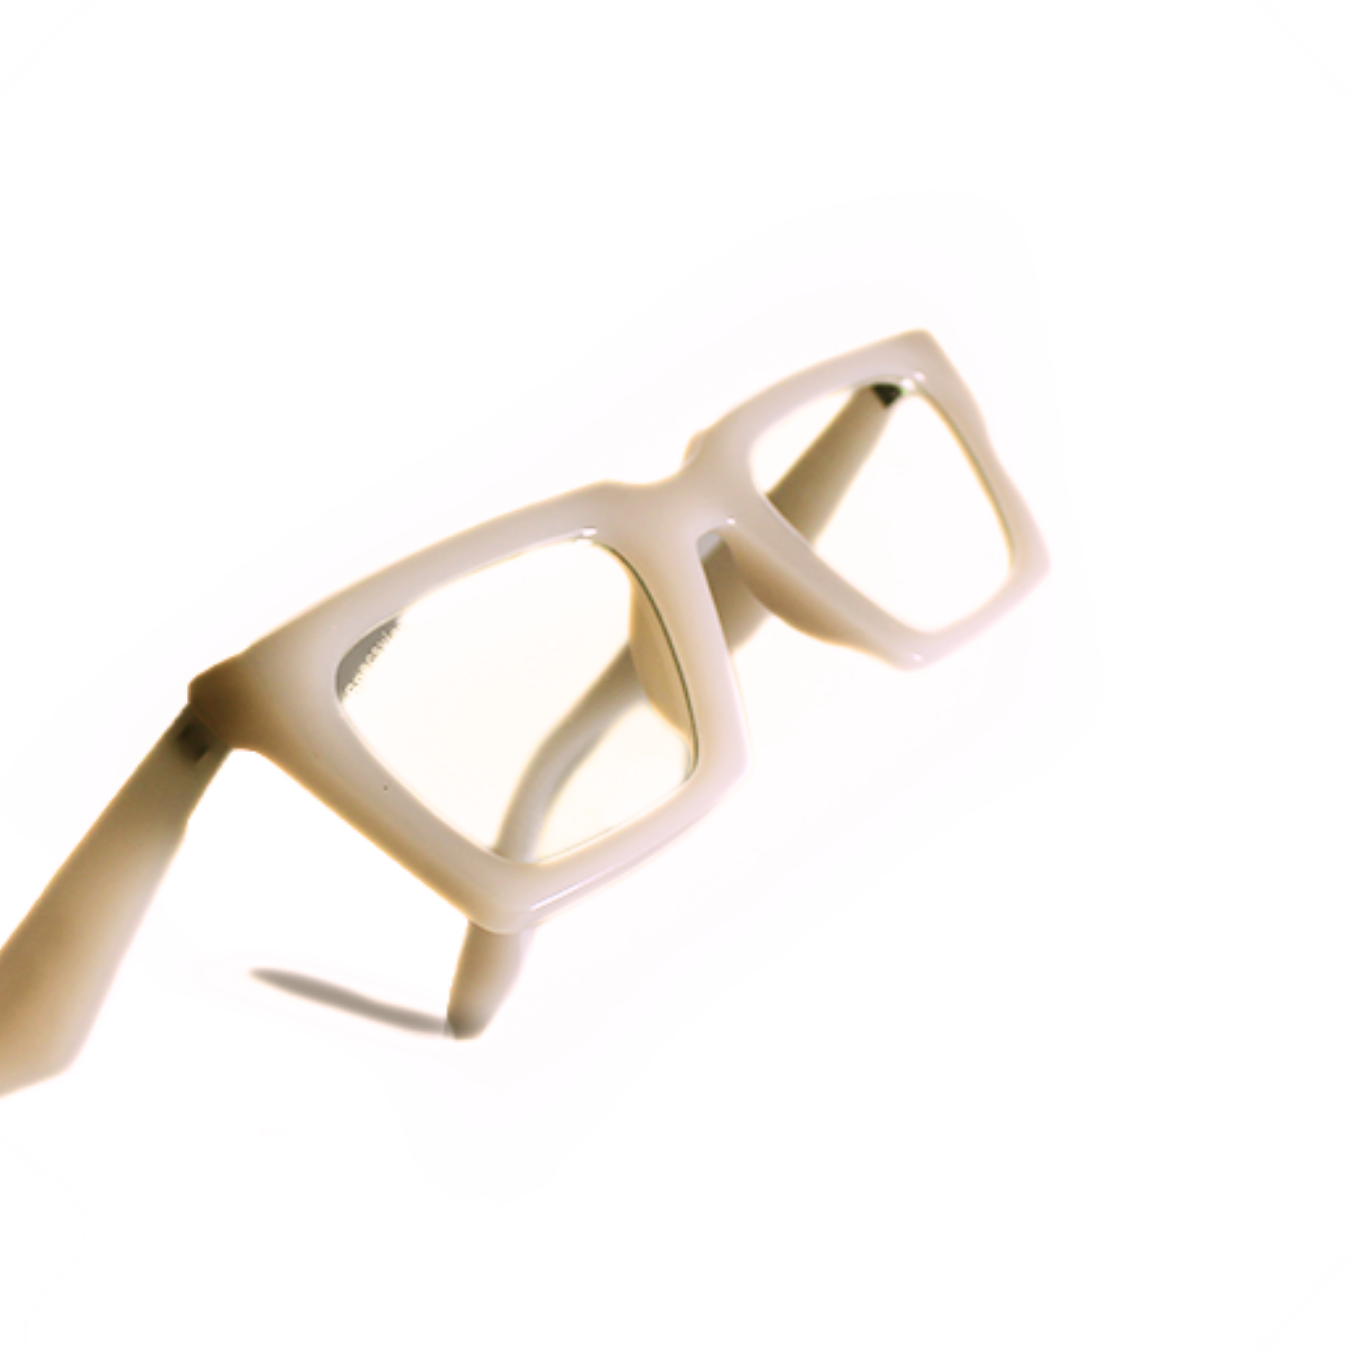 YVONNE//002 I Zero Power Computer Glasses - Specsview